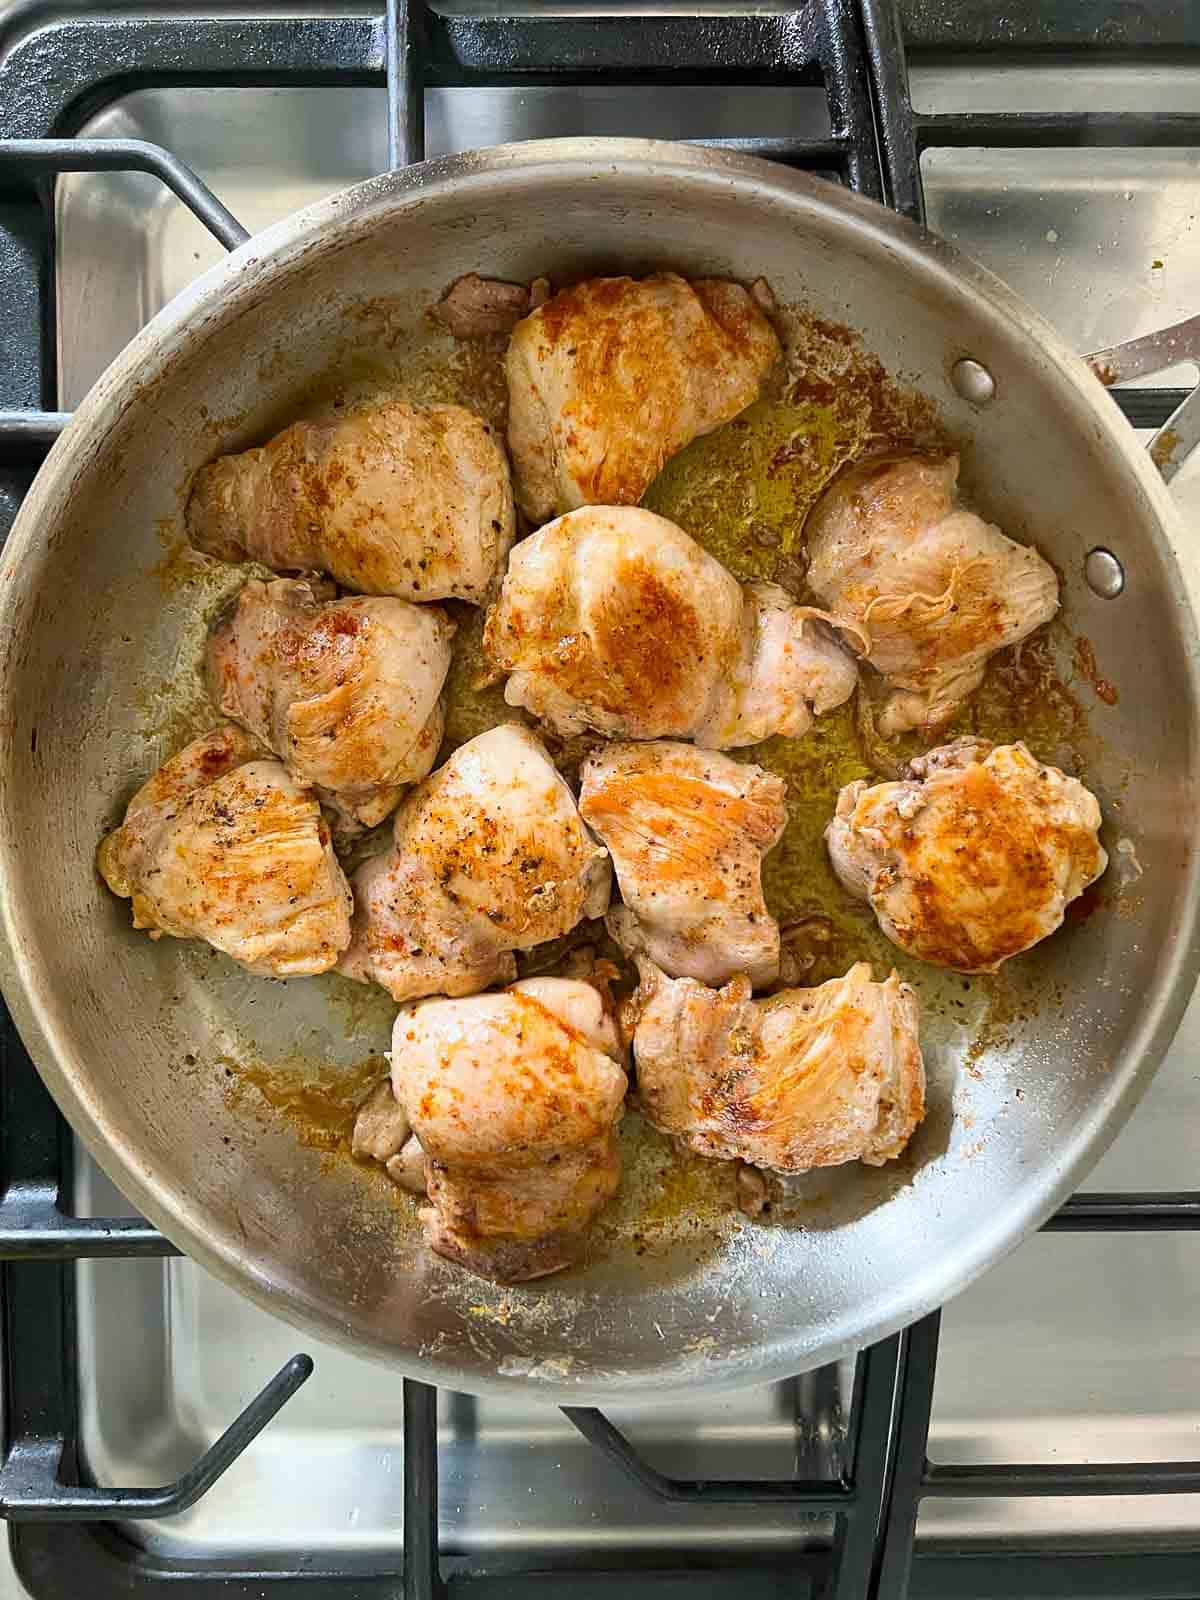 Browning chicken thighs in a skillet to make lemon artichoke chicken.